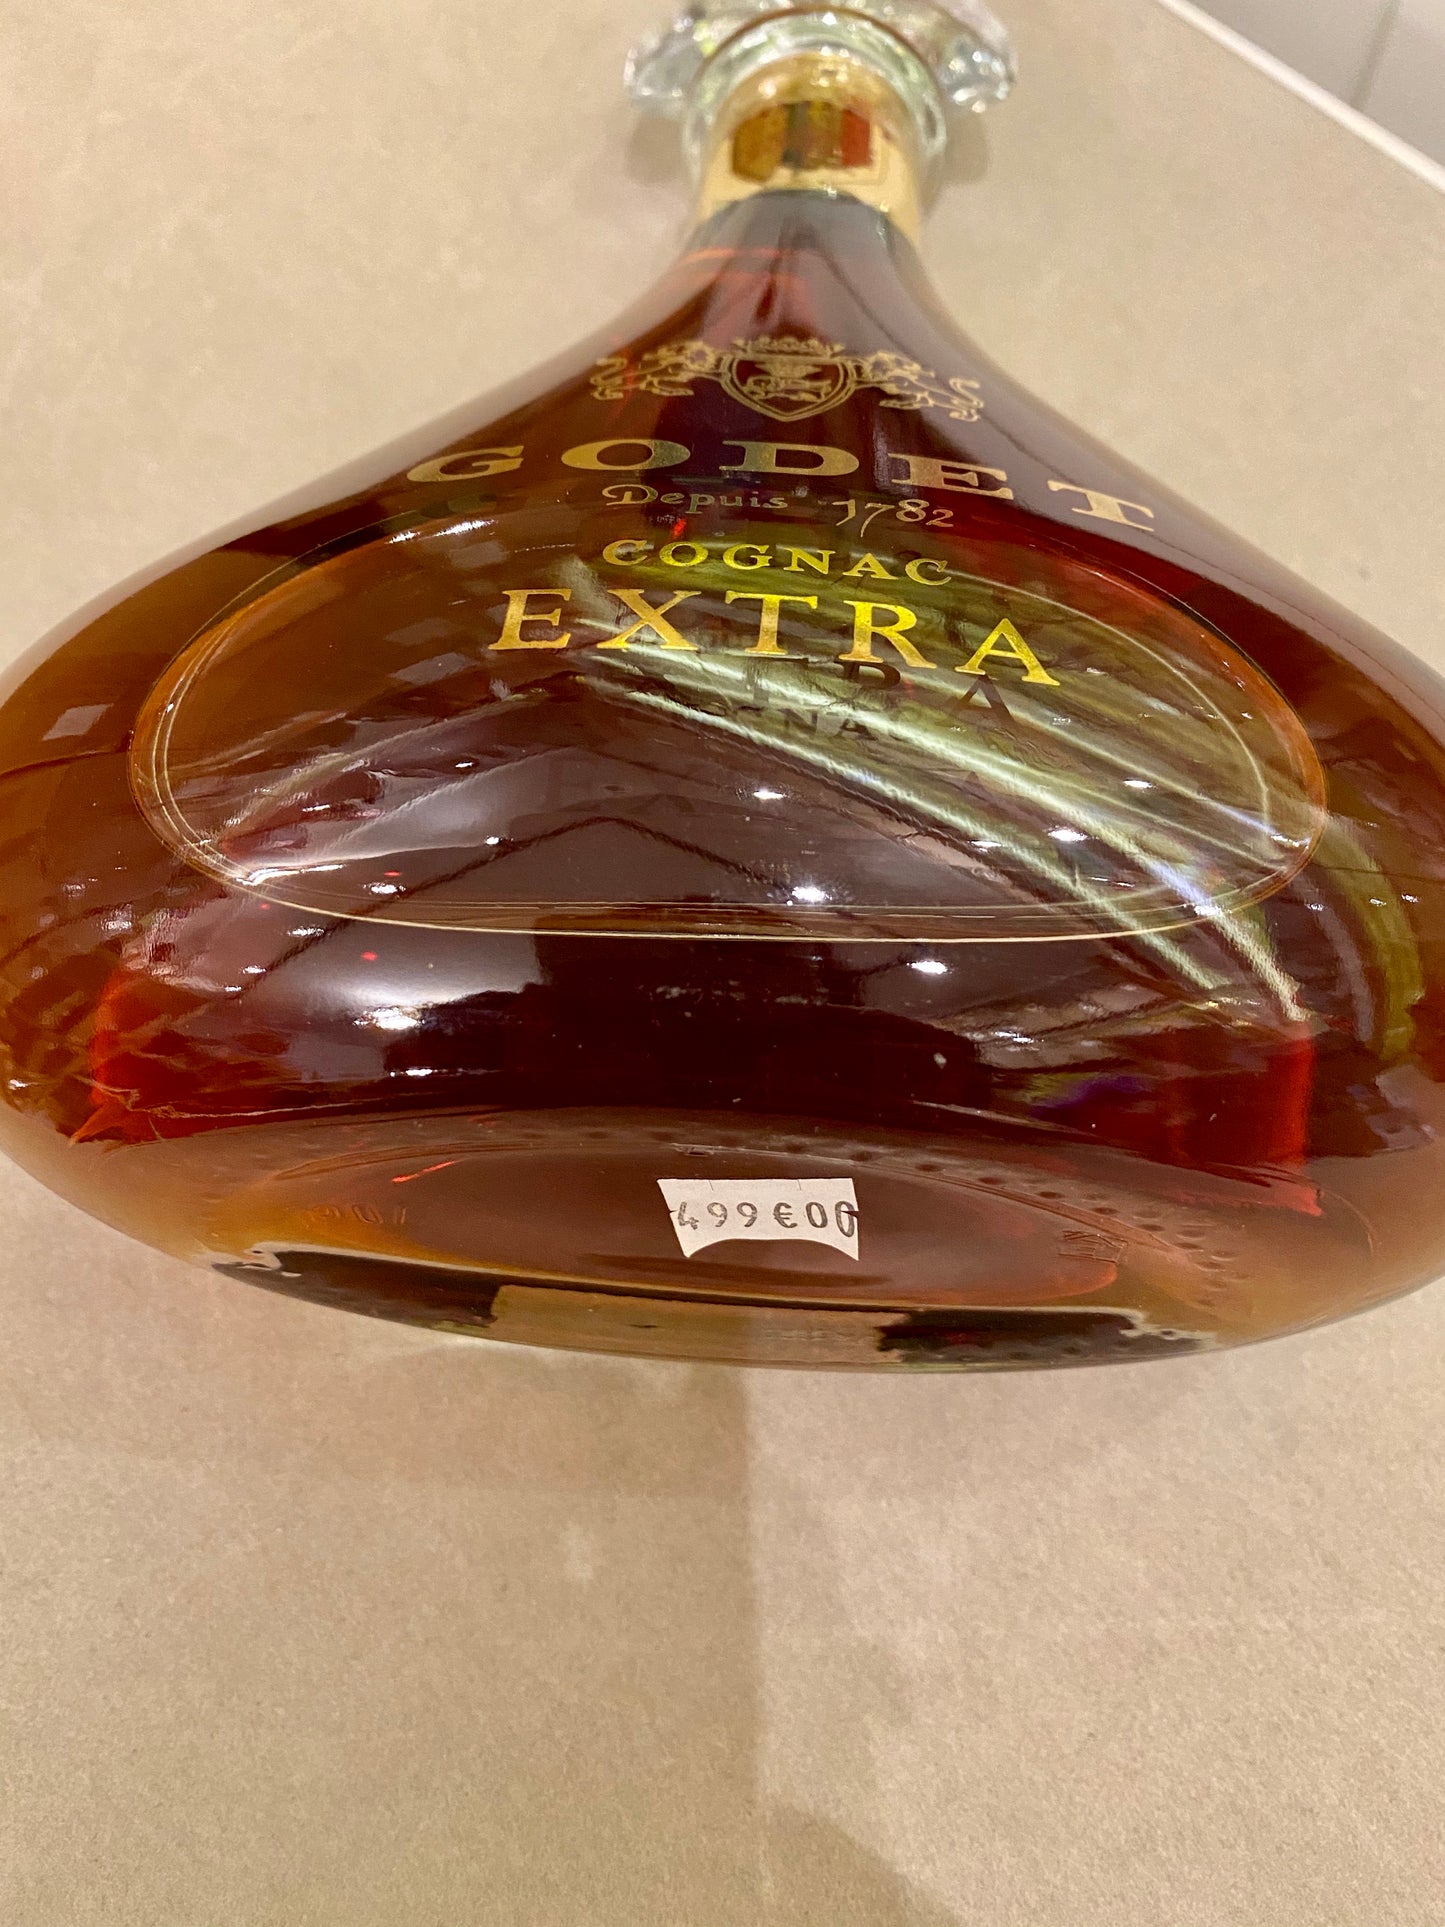 Godet Cognac Extra depuis 1782